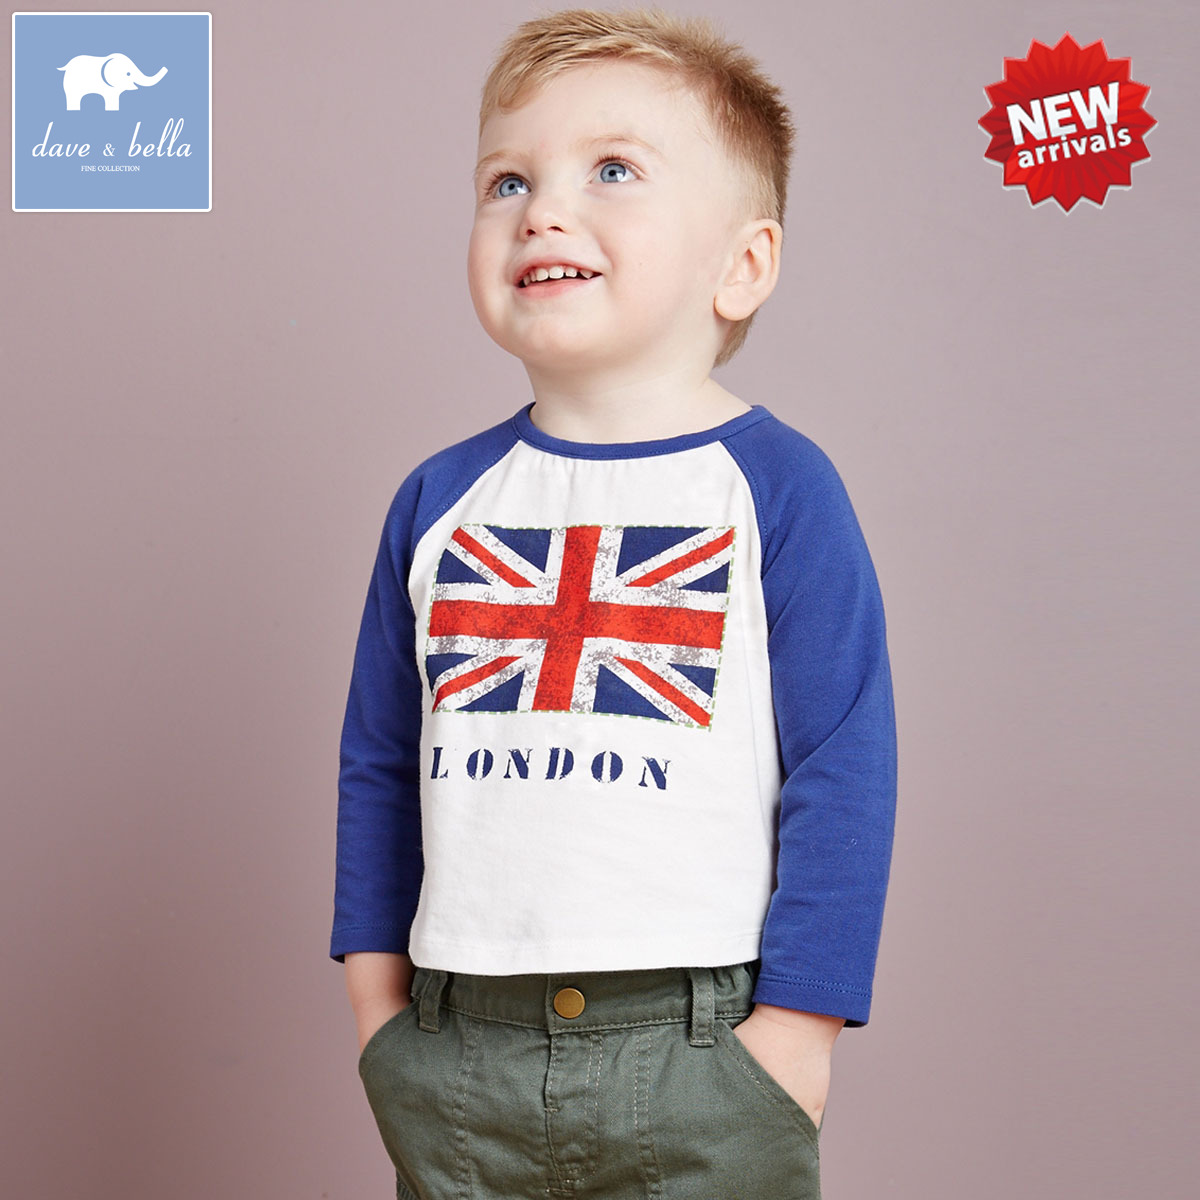 davebella戴维贝拉男童秋装新款宝宝婴儿卡通长袖T恤TX